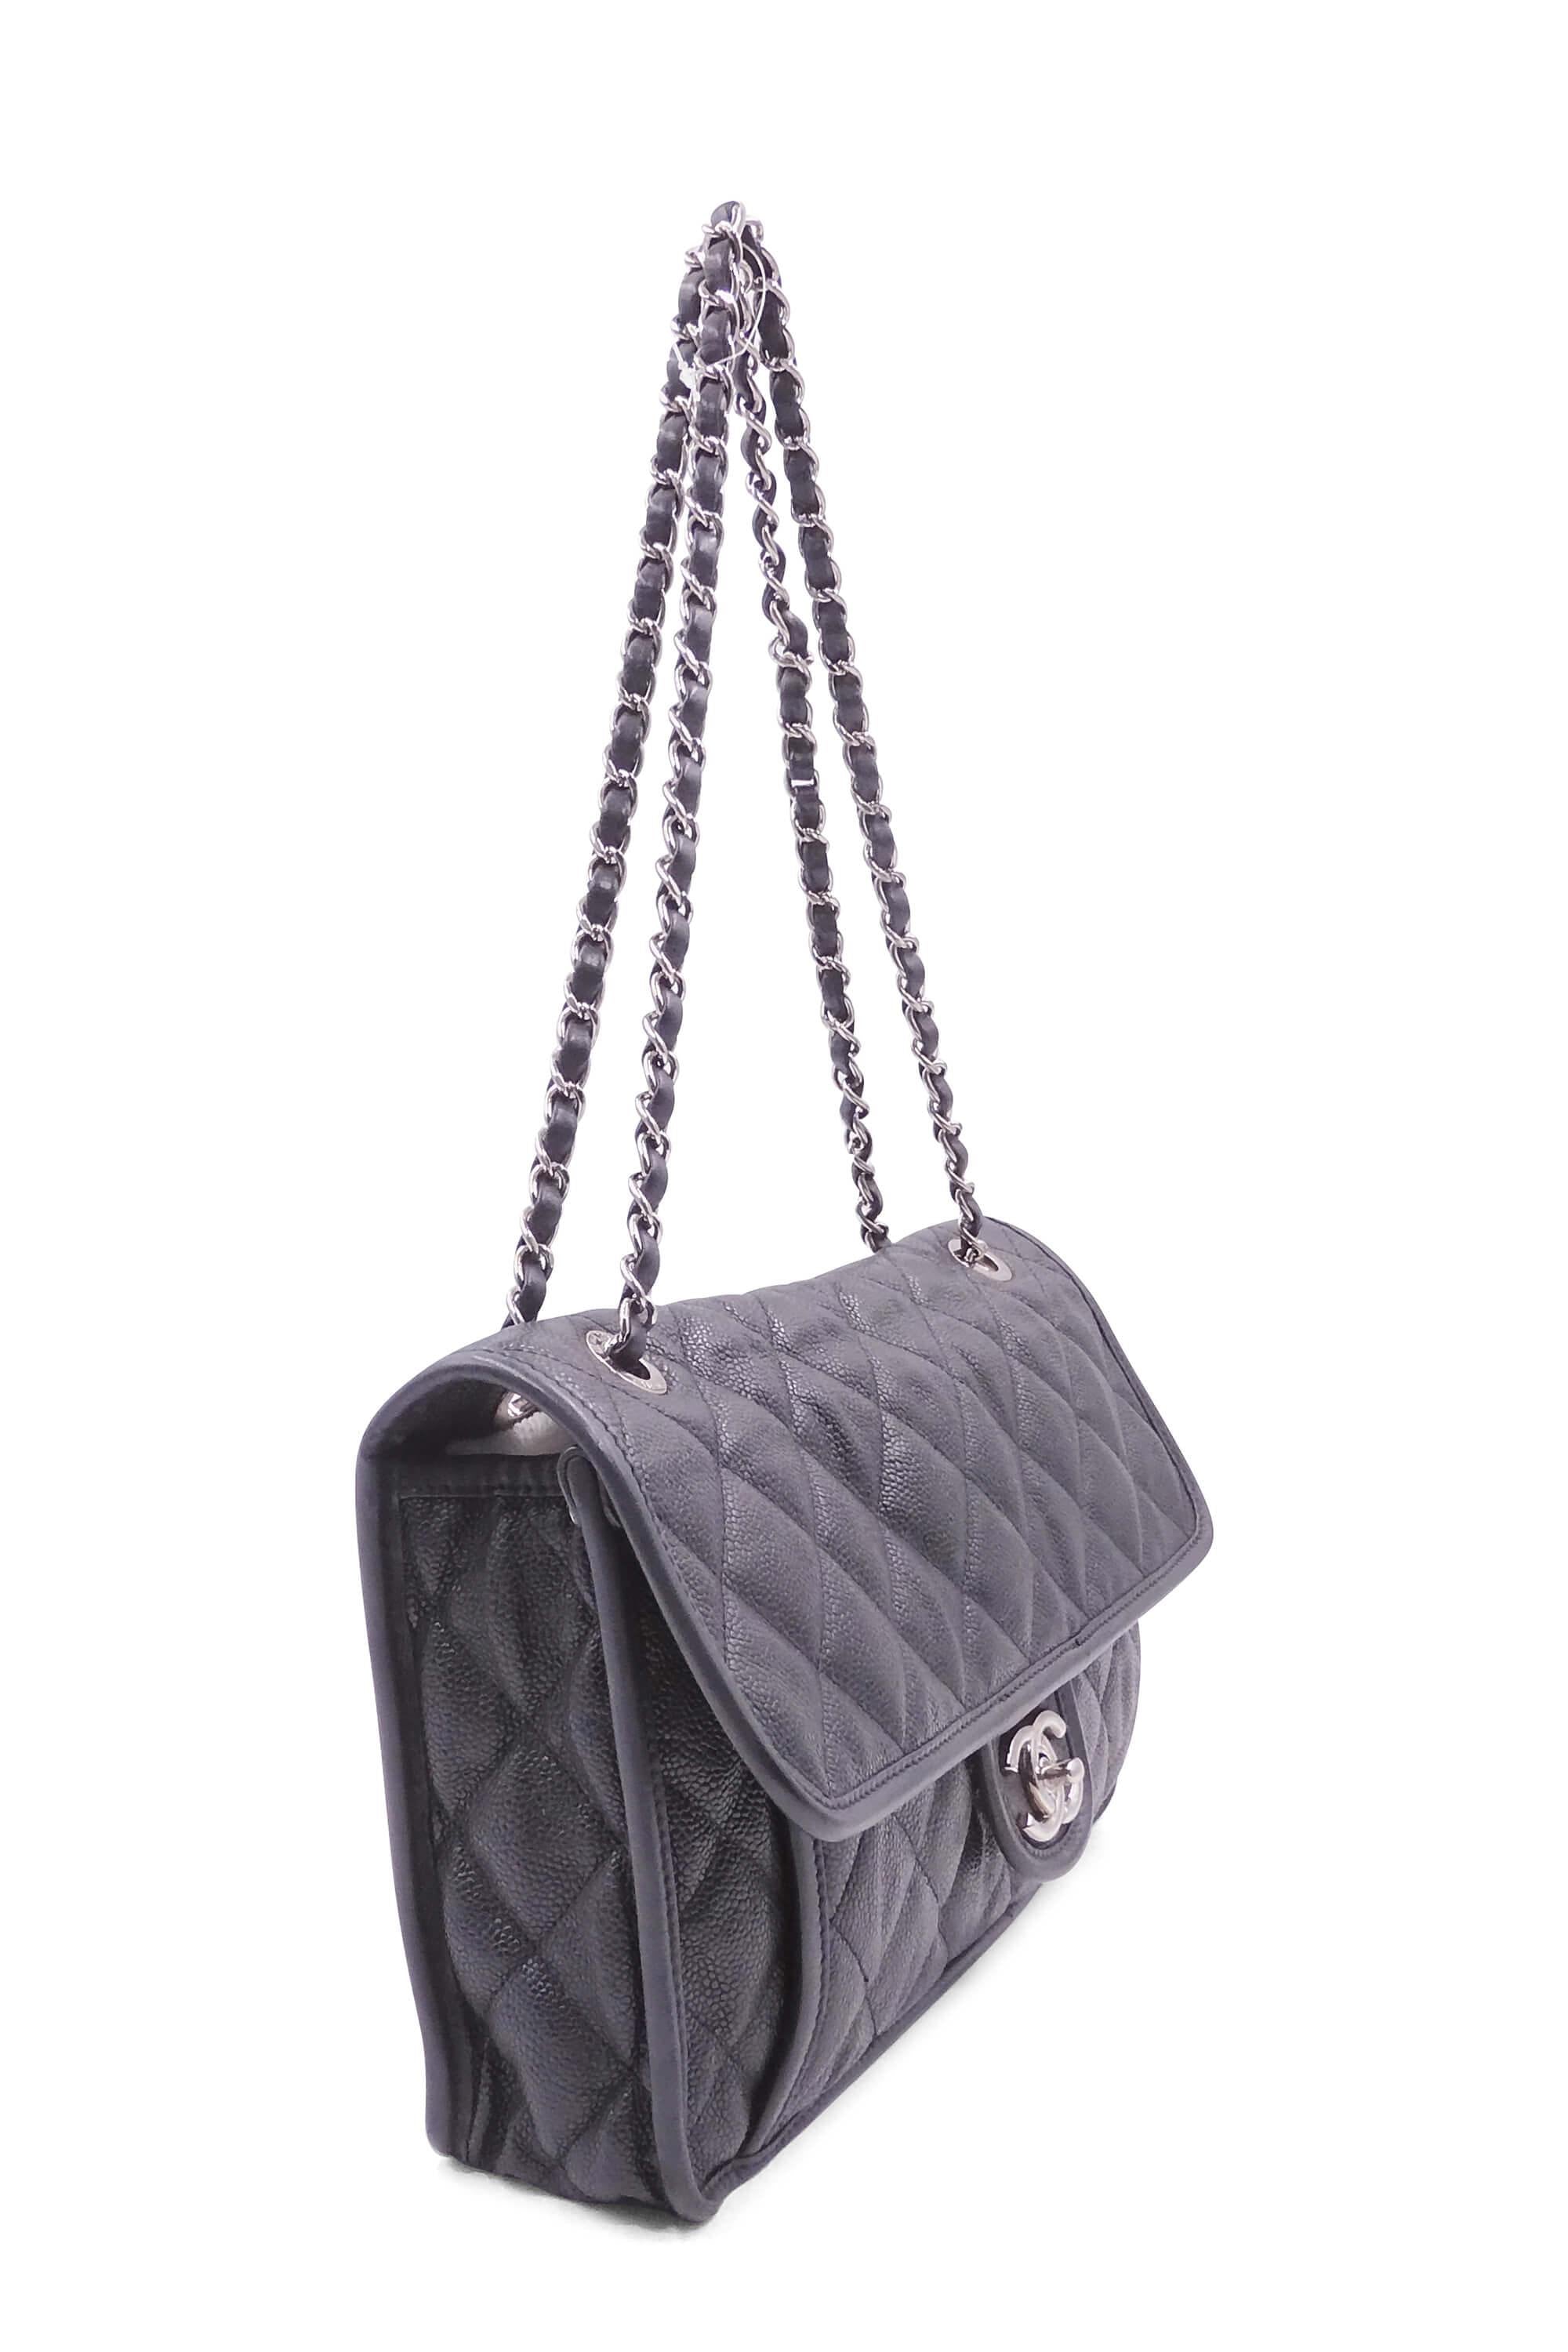 Chanel Large French Riviera Flap Bag - Black Shoulder Bags